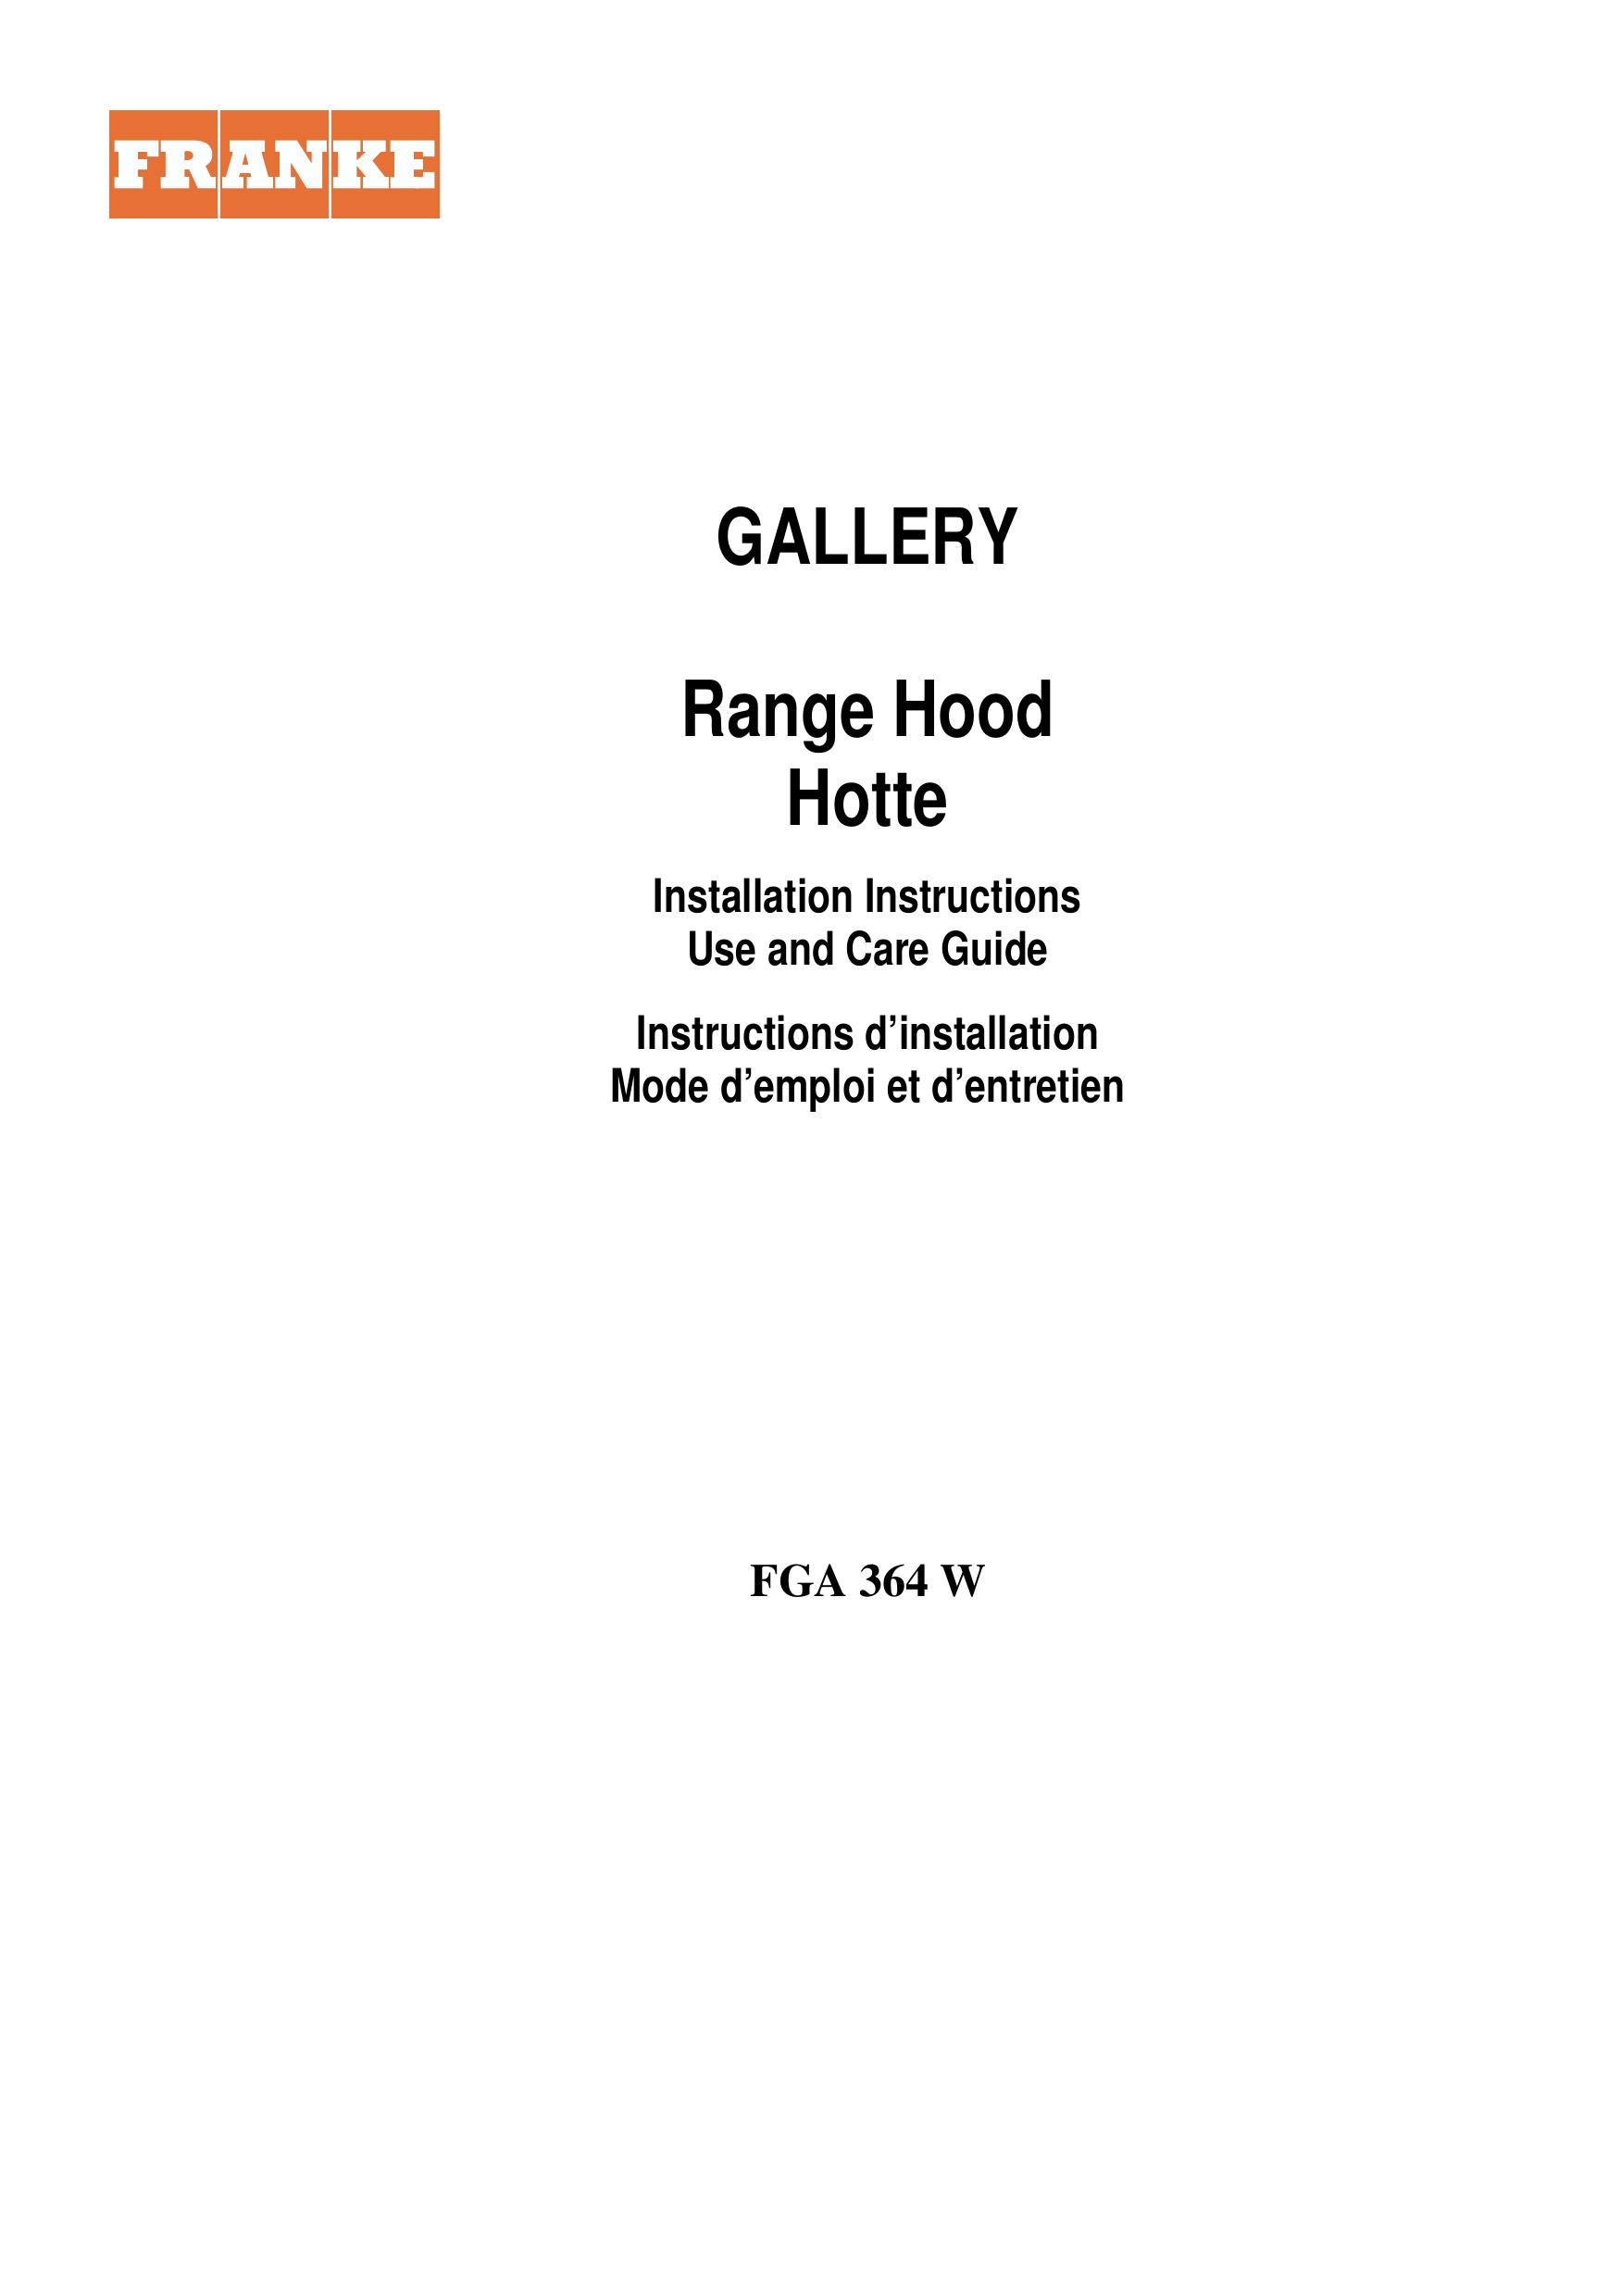 Franke Consumer Products FGA 364 W Ventilation Hood User Manual